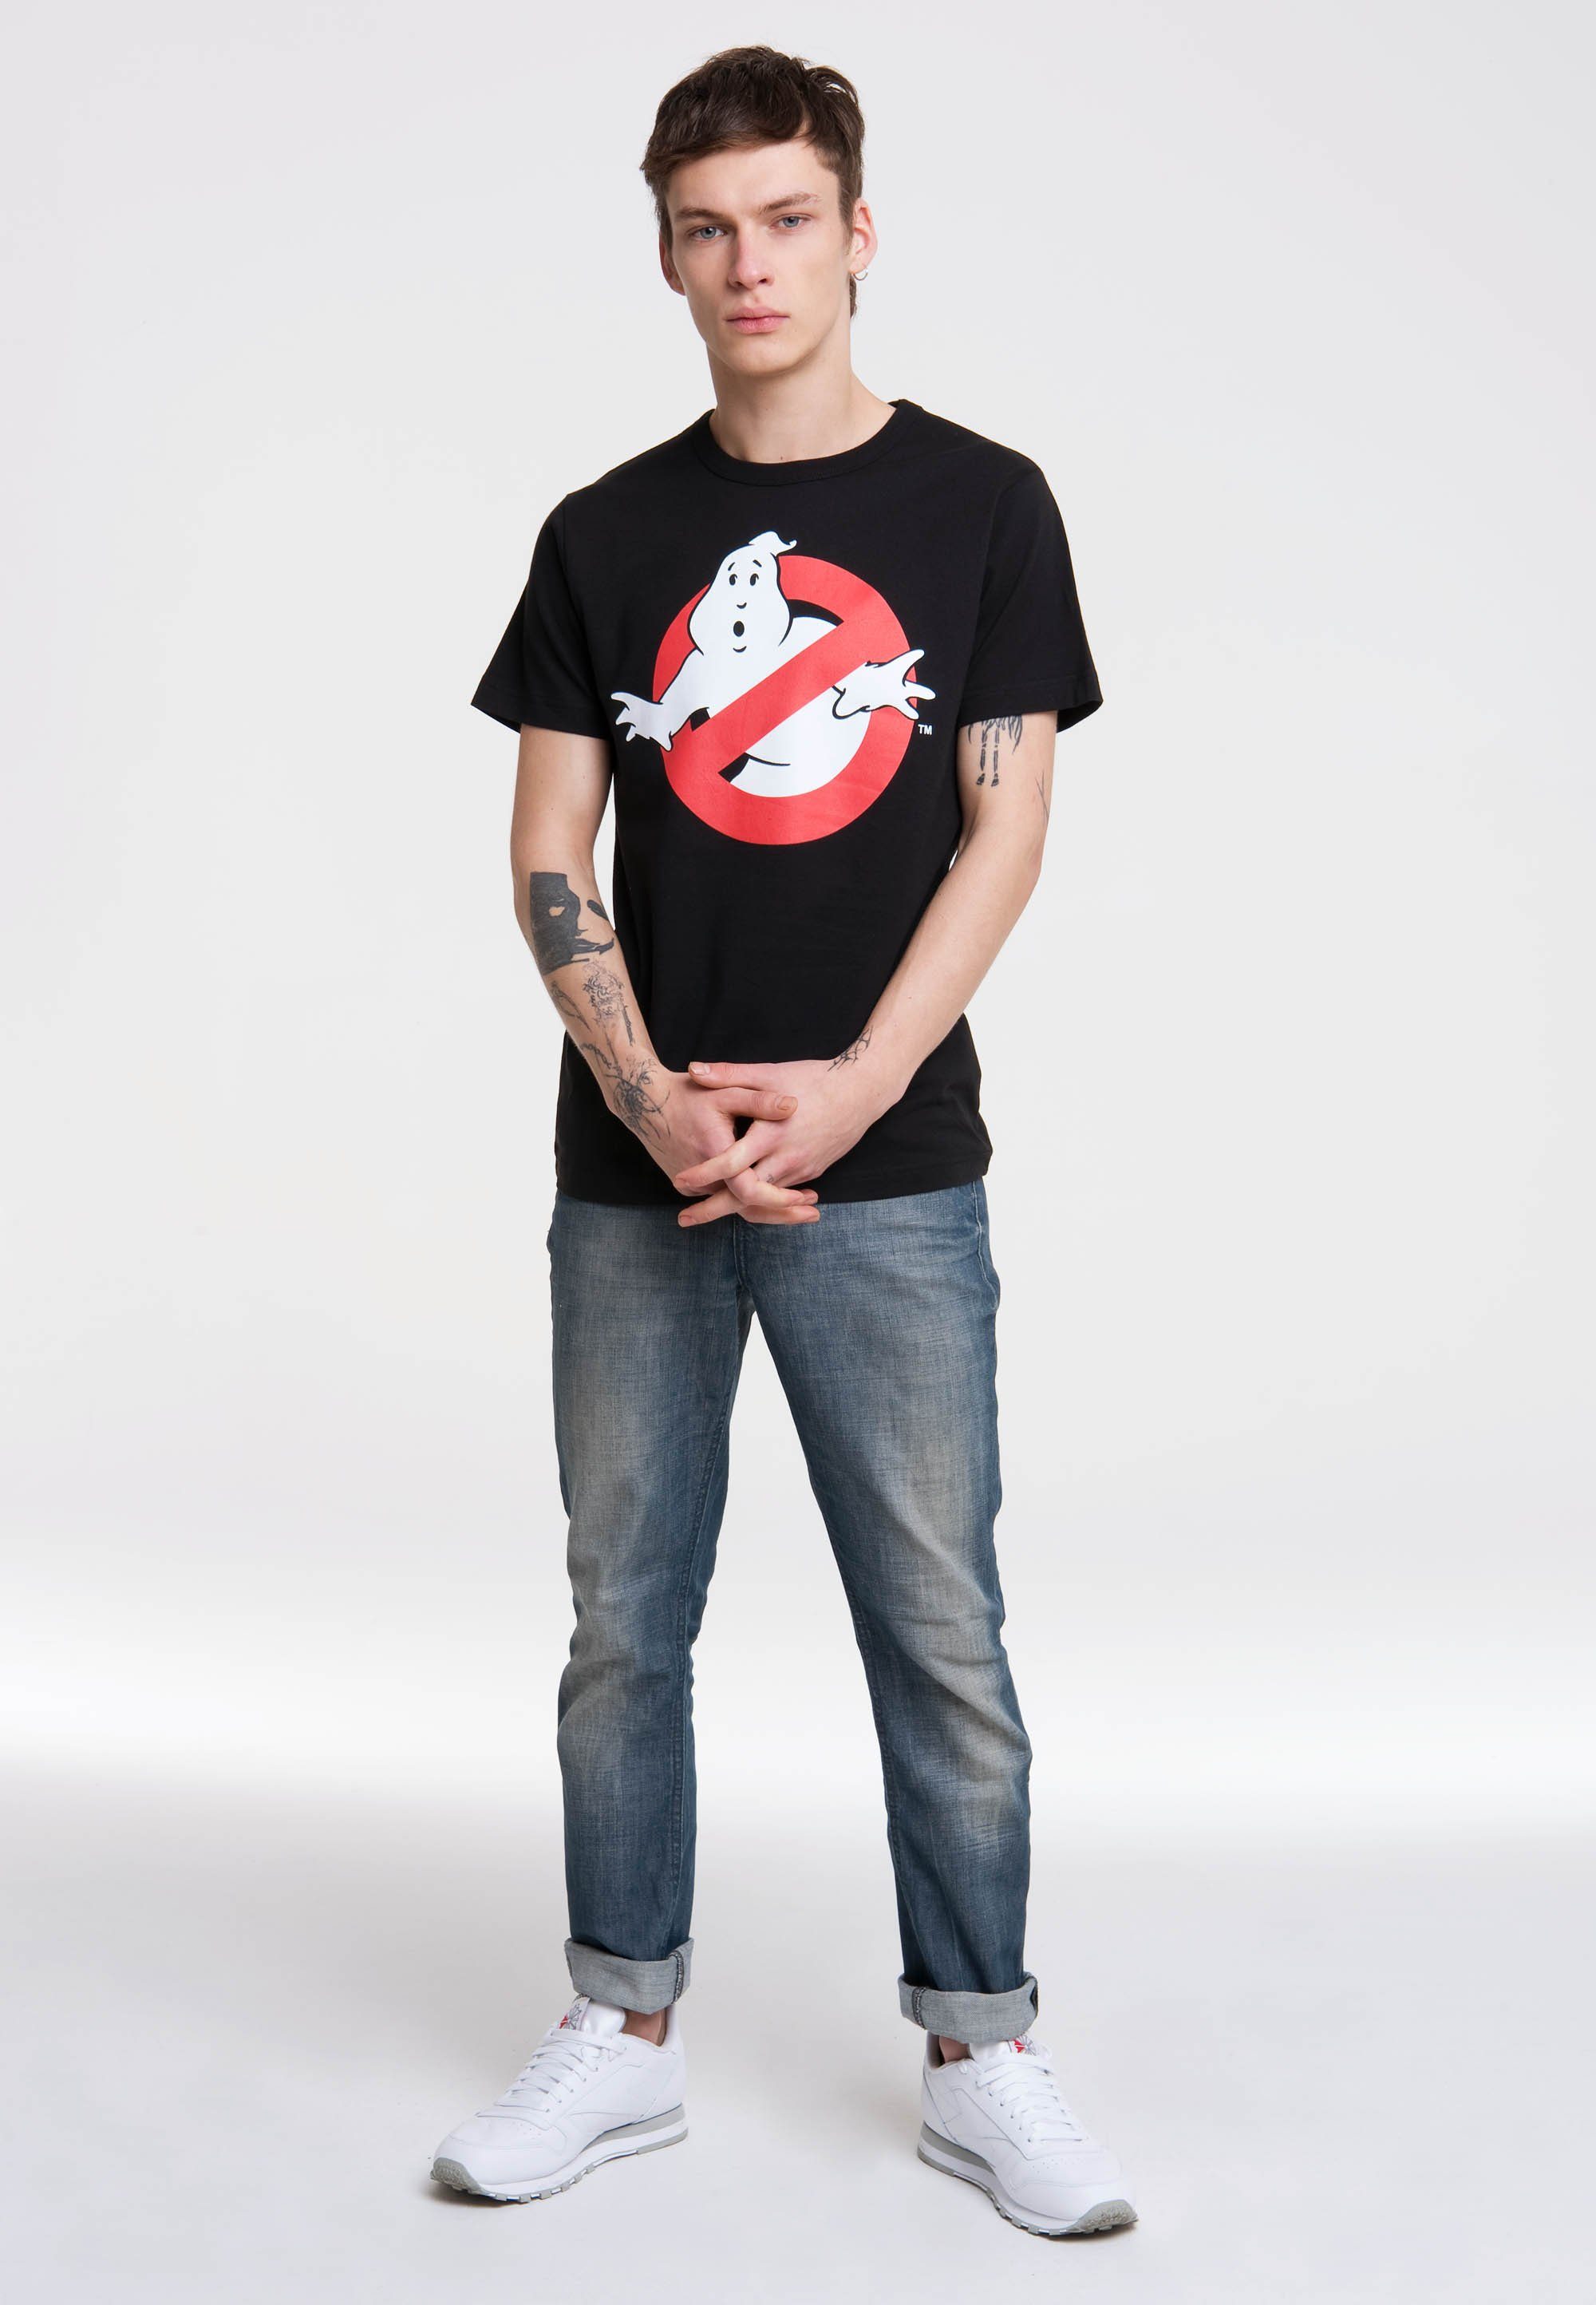 LOGOSHIRT T-Shirt Print kultigem No Ghostbusters Ghost mit